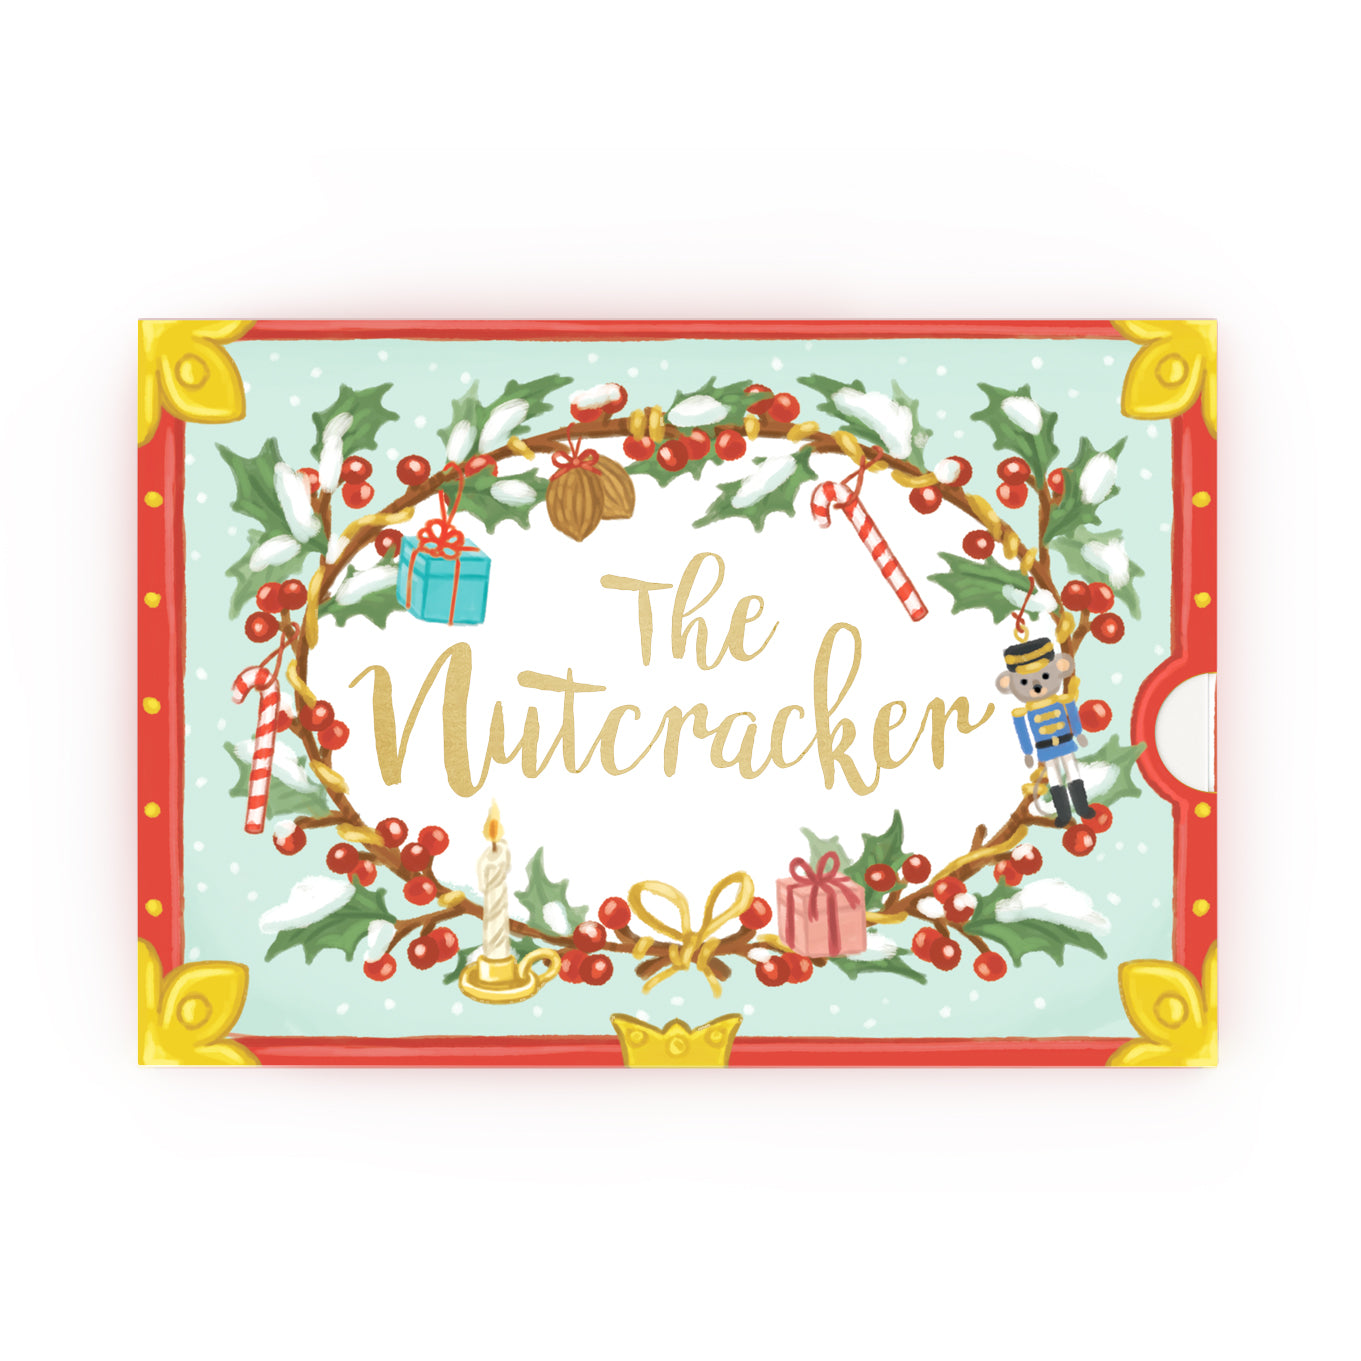 The Nutcracker Music Box Card Novelty Dancing Musical Christmas Card